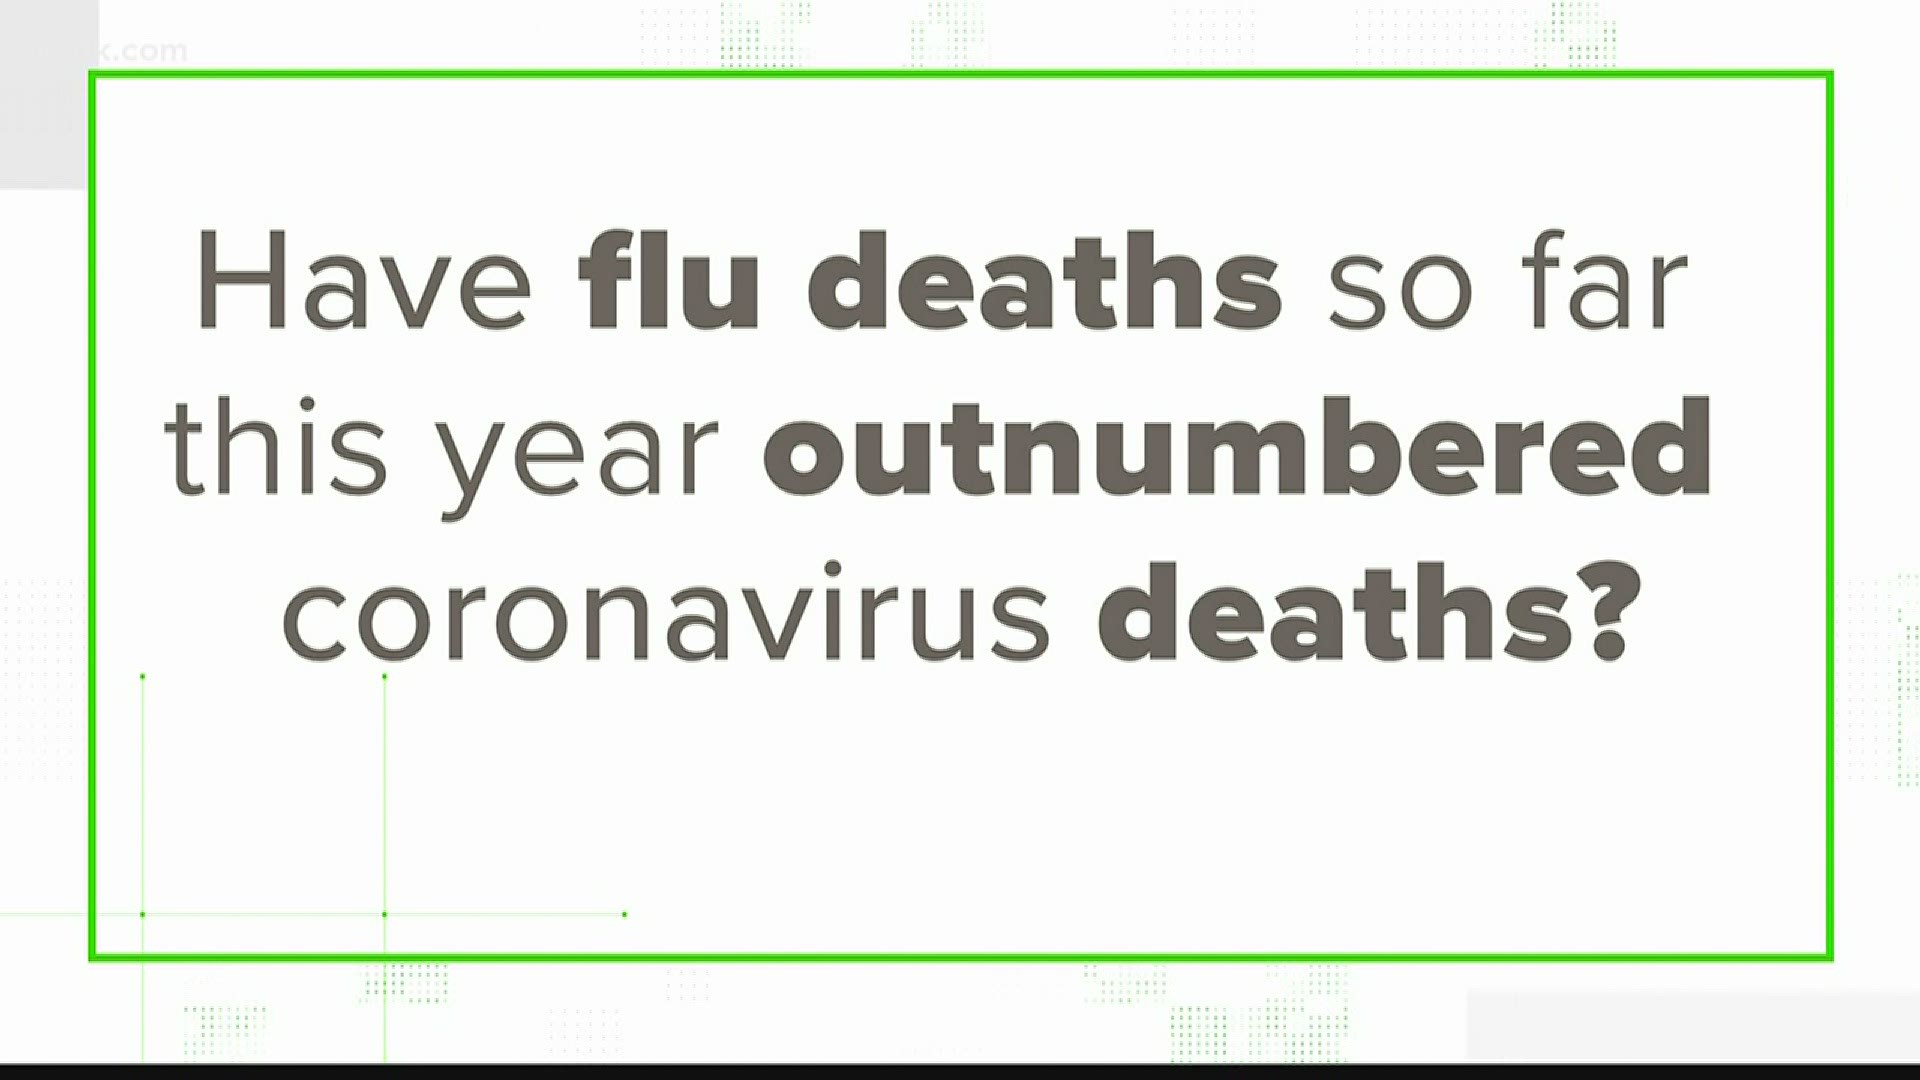 Has the flu been more deadly than the coronavirus so far in 2020?